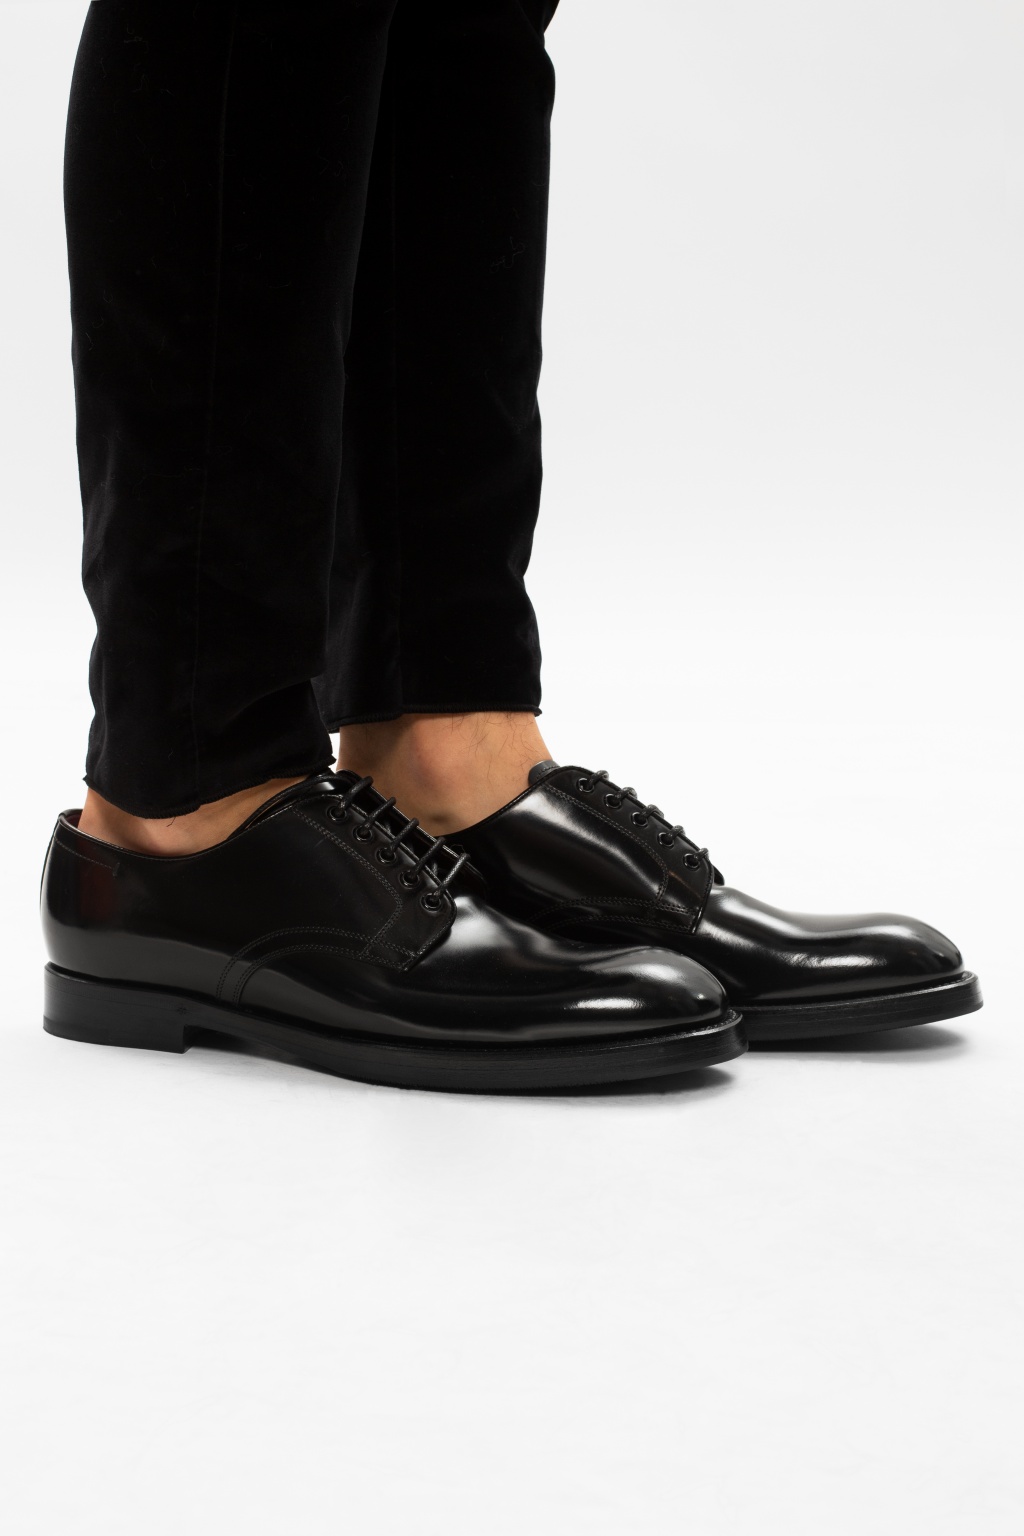 Dolce & Gabbana lace trim camisole Black Leather Derby shoes